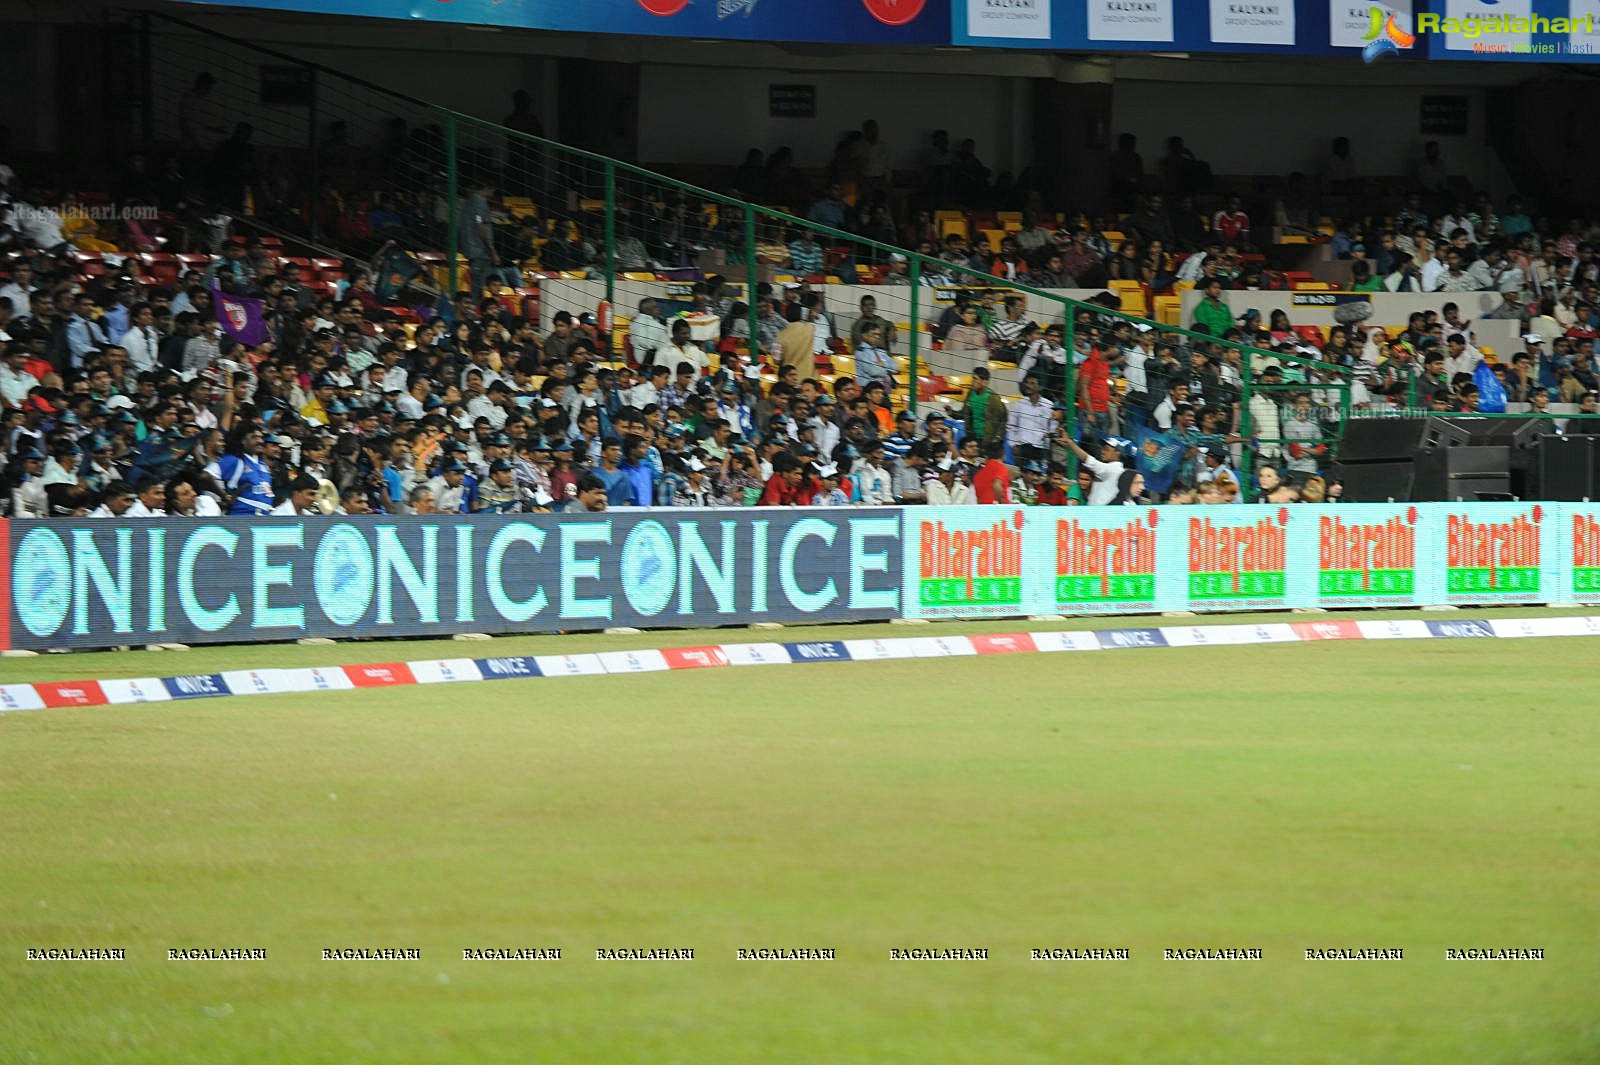 CCL 2 Bengal Tigers Vs Karnataka Bulldozers Match